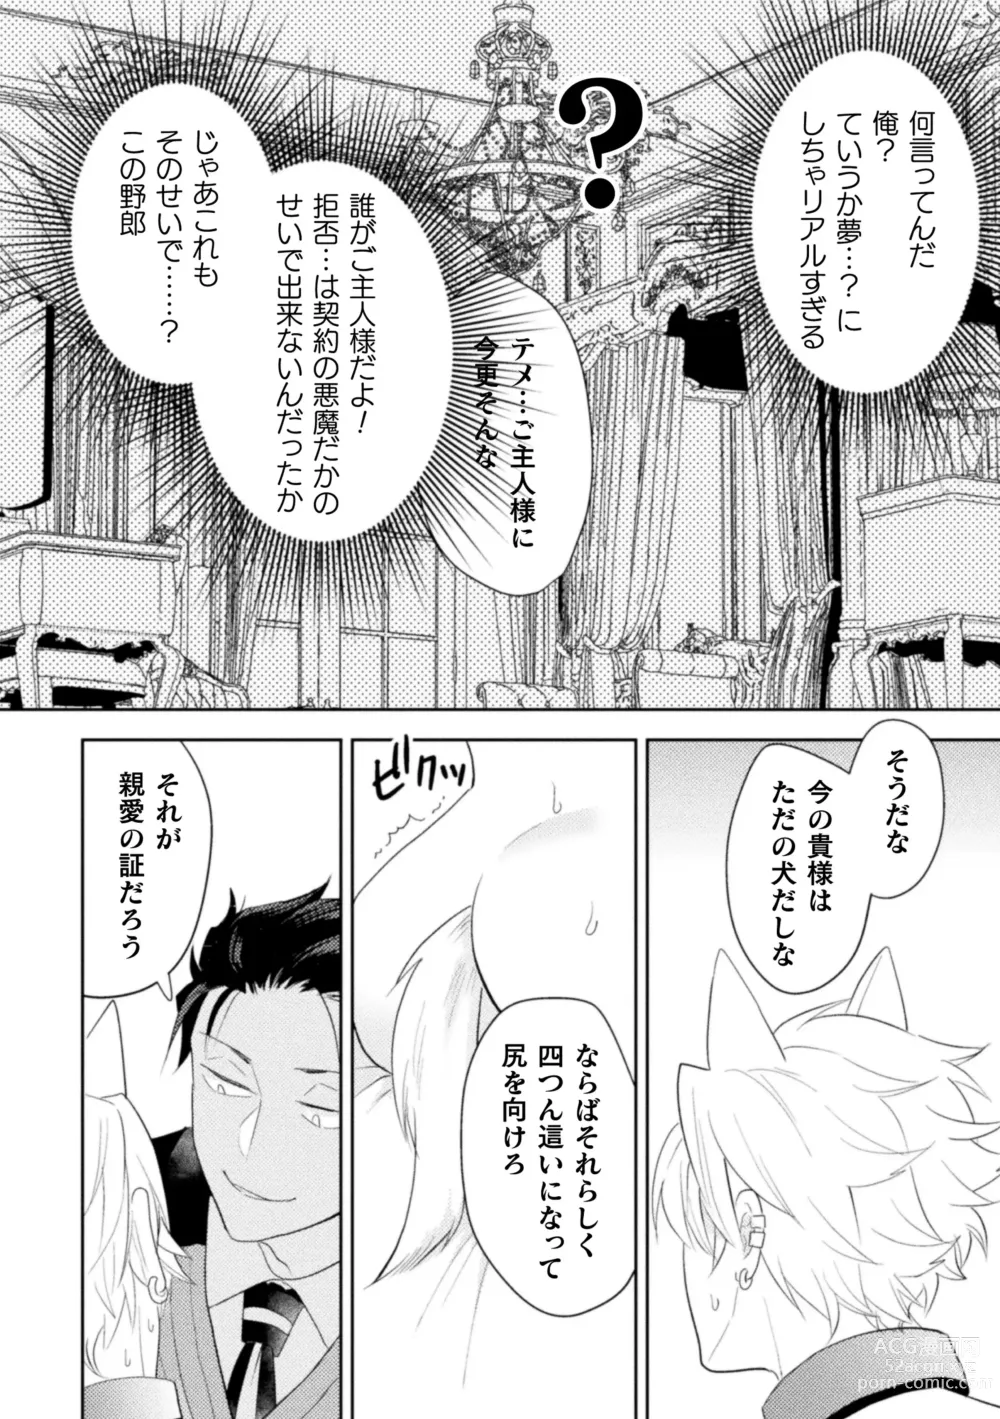 Page 8 of manga Zekkai Rougoku 5 Eien no Rougoku Zenpen